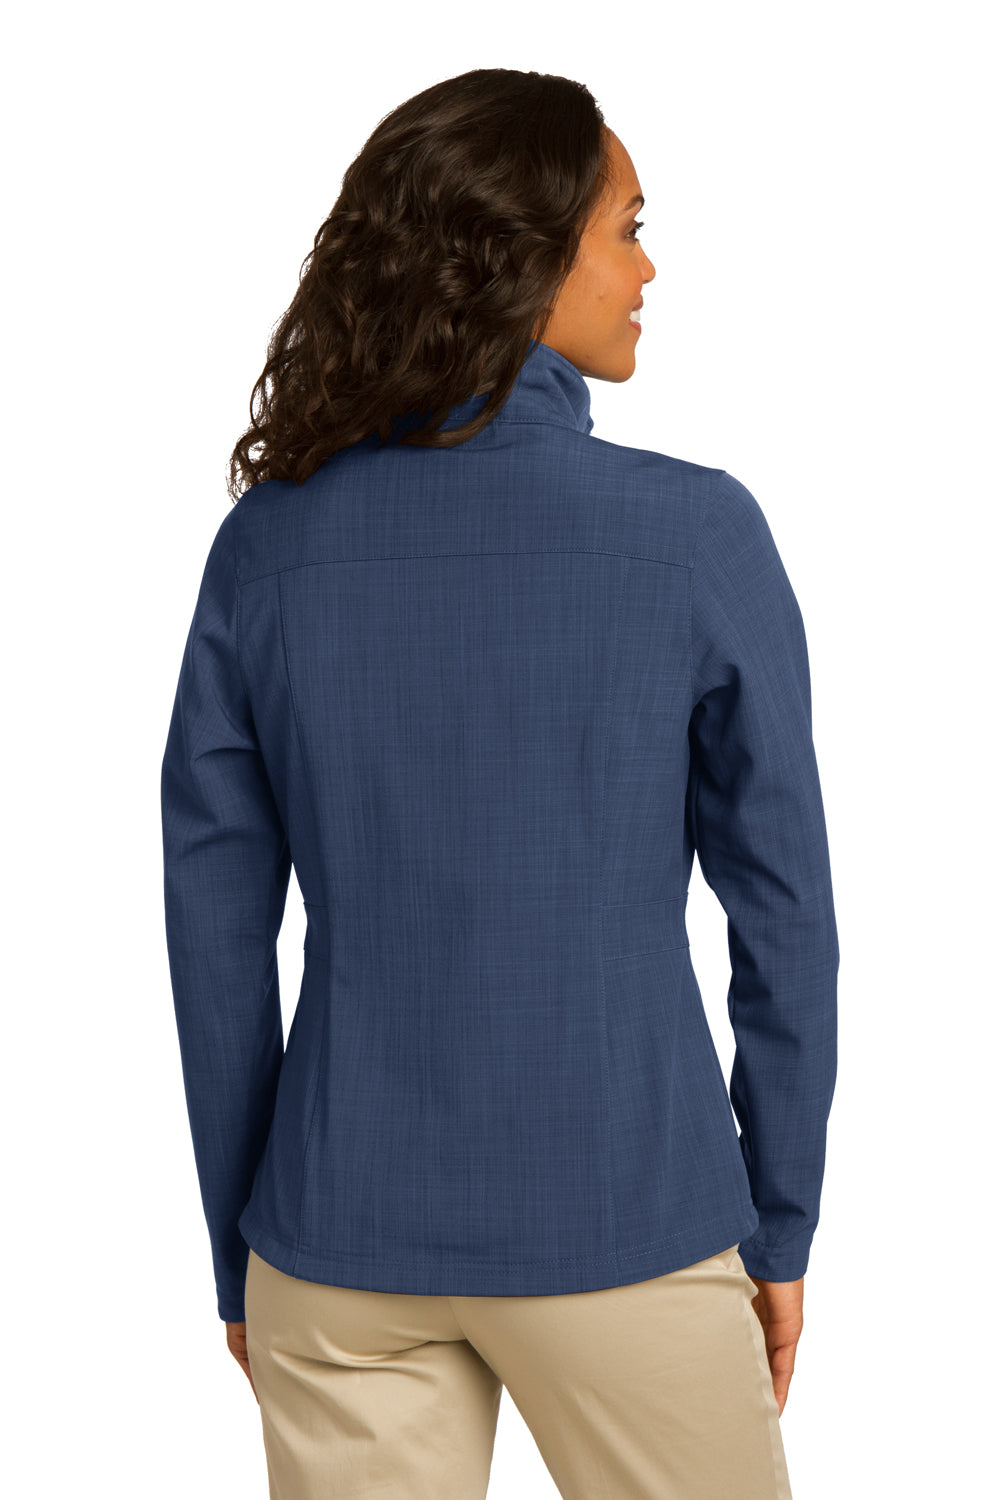 Eddie Bauer EB533 Womens Shaded Crosshatch Wind & Water Resistant Full Zip Jacket Blue Model Back